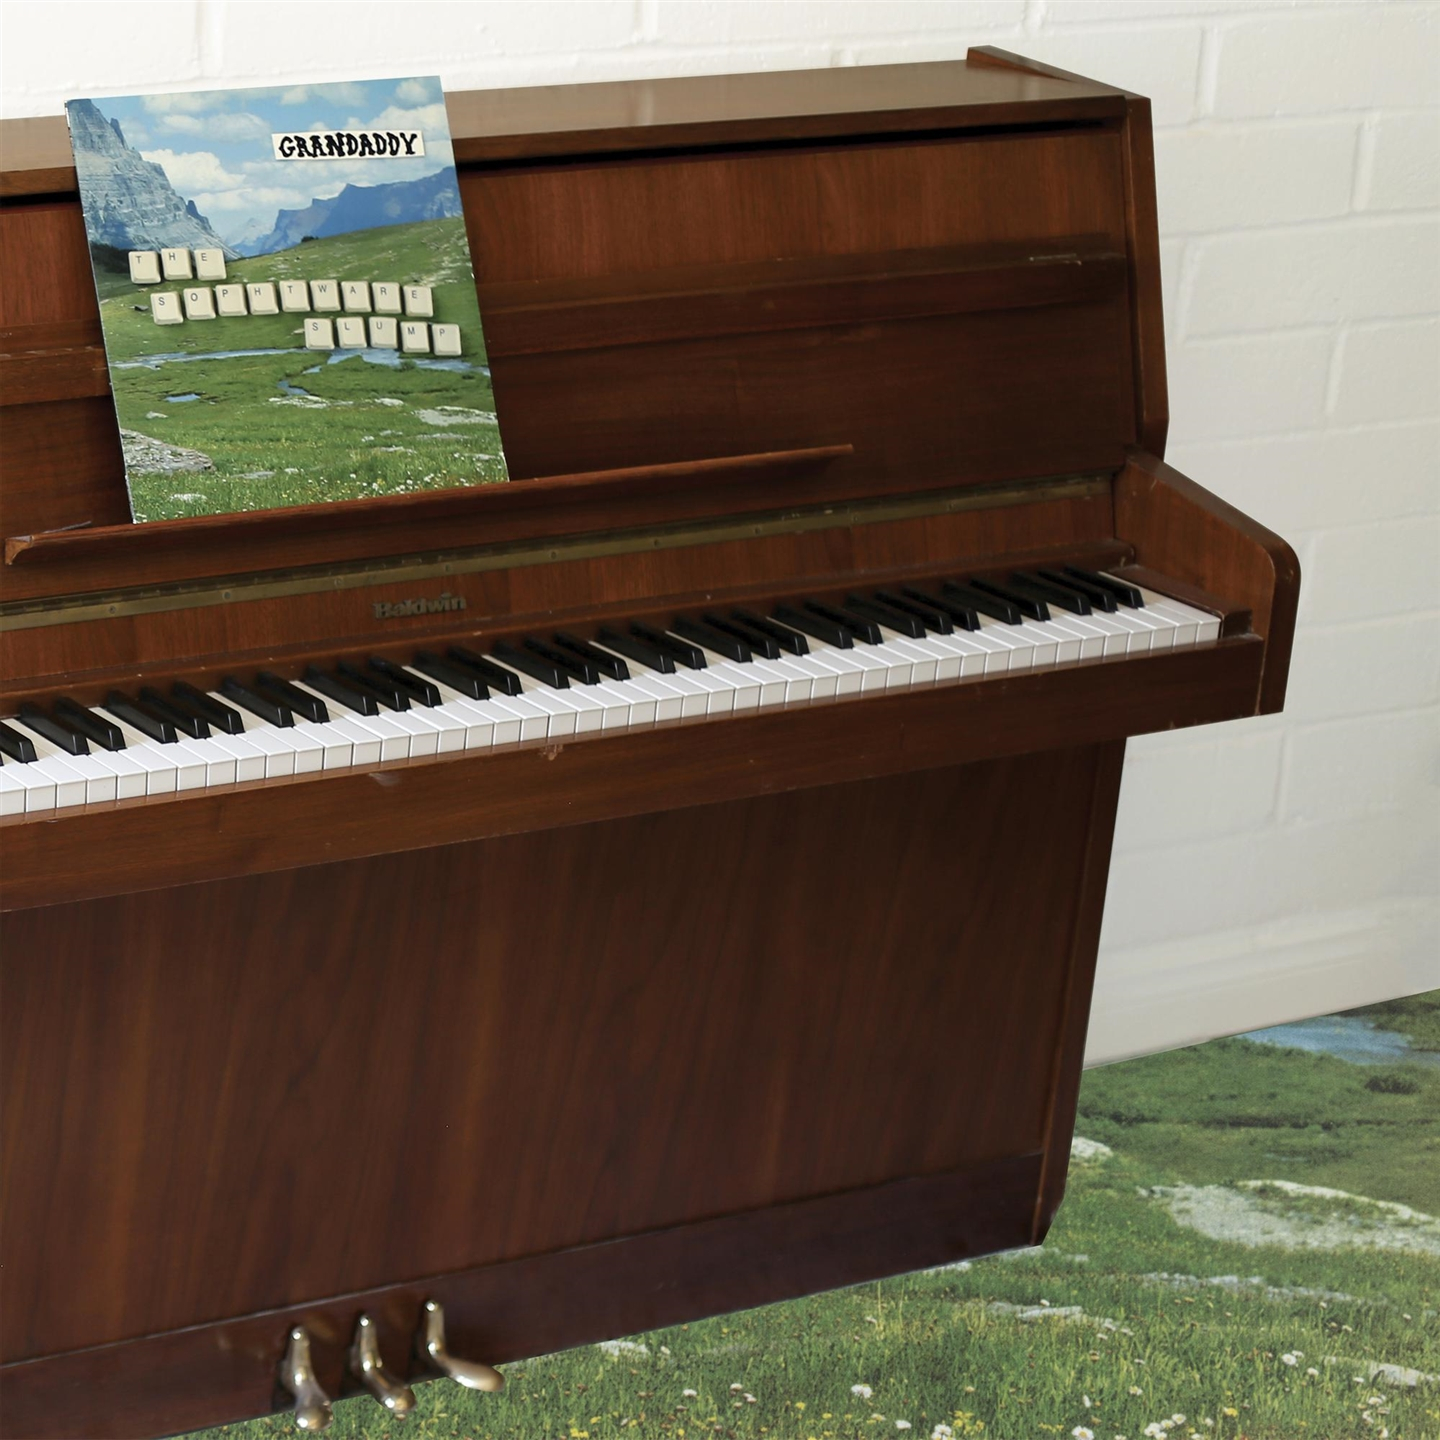 Grandaddy - The Sophtware Slump On A Wooden Piano [Lp] - Photo 1/1